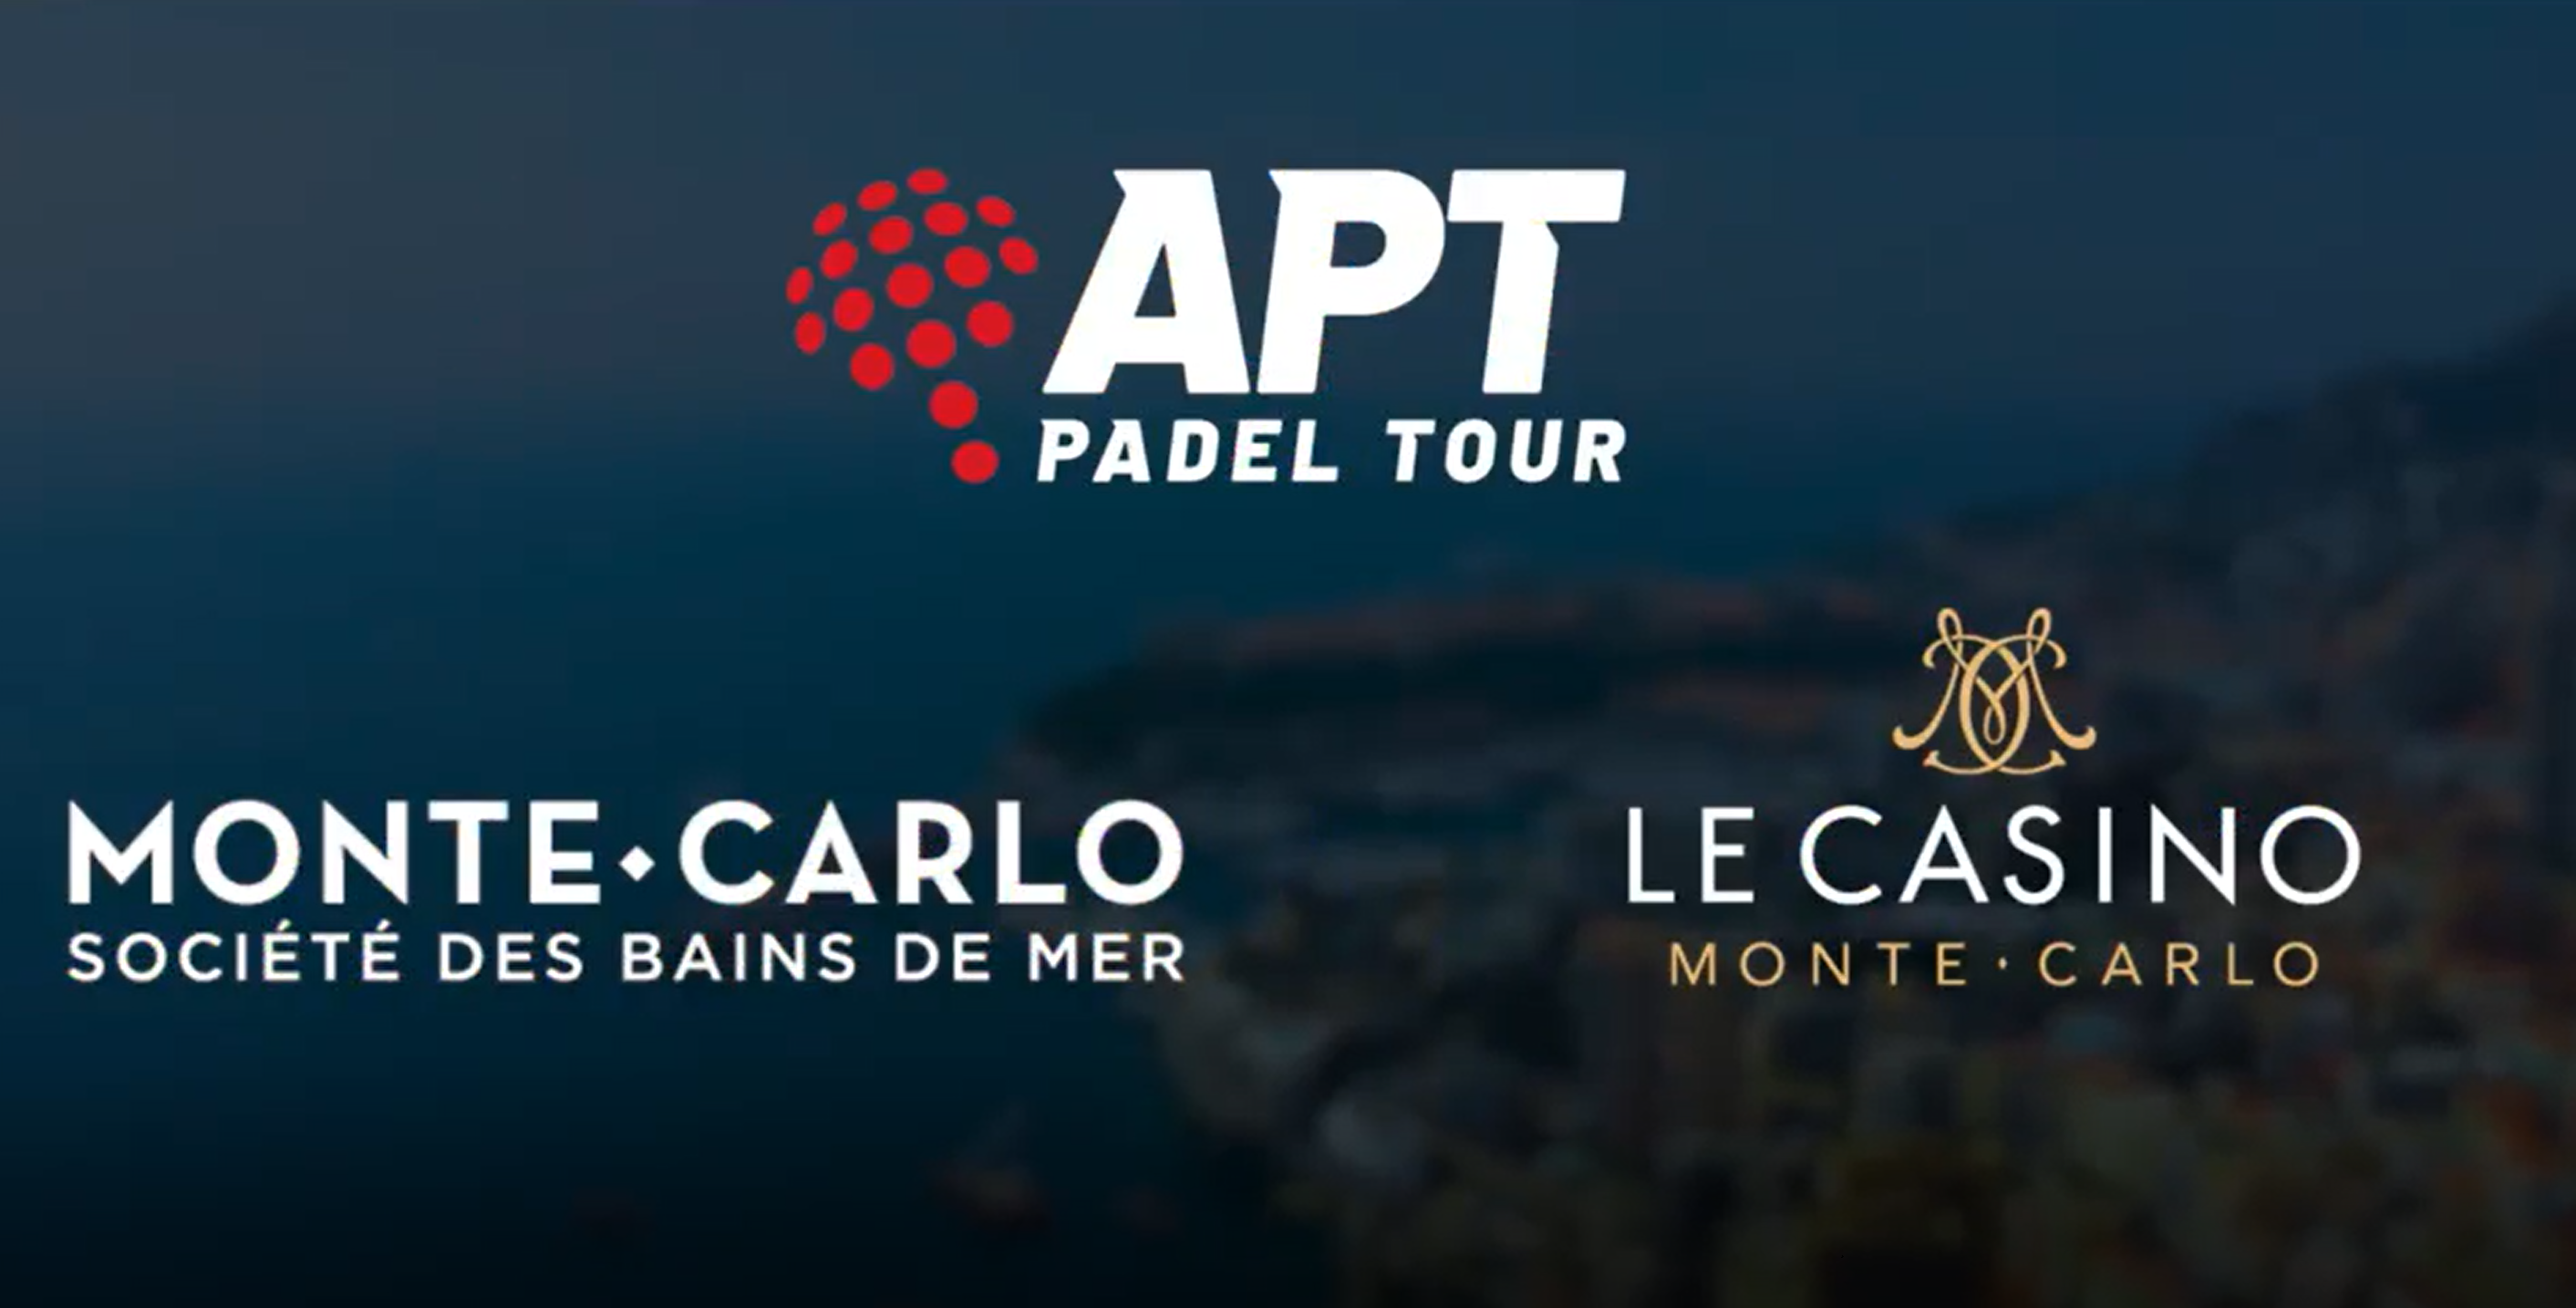 APT Padel Tour Mónaco: ¡va a hacer calor!